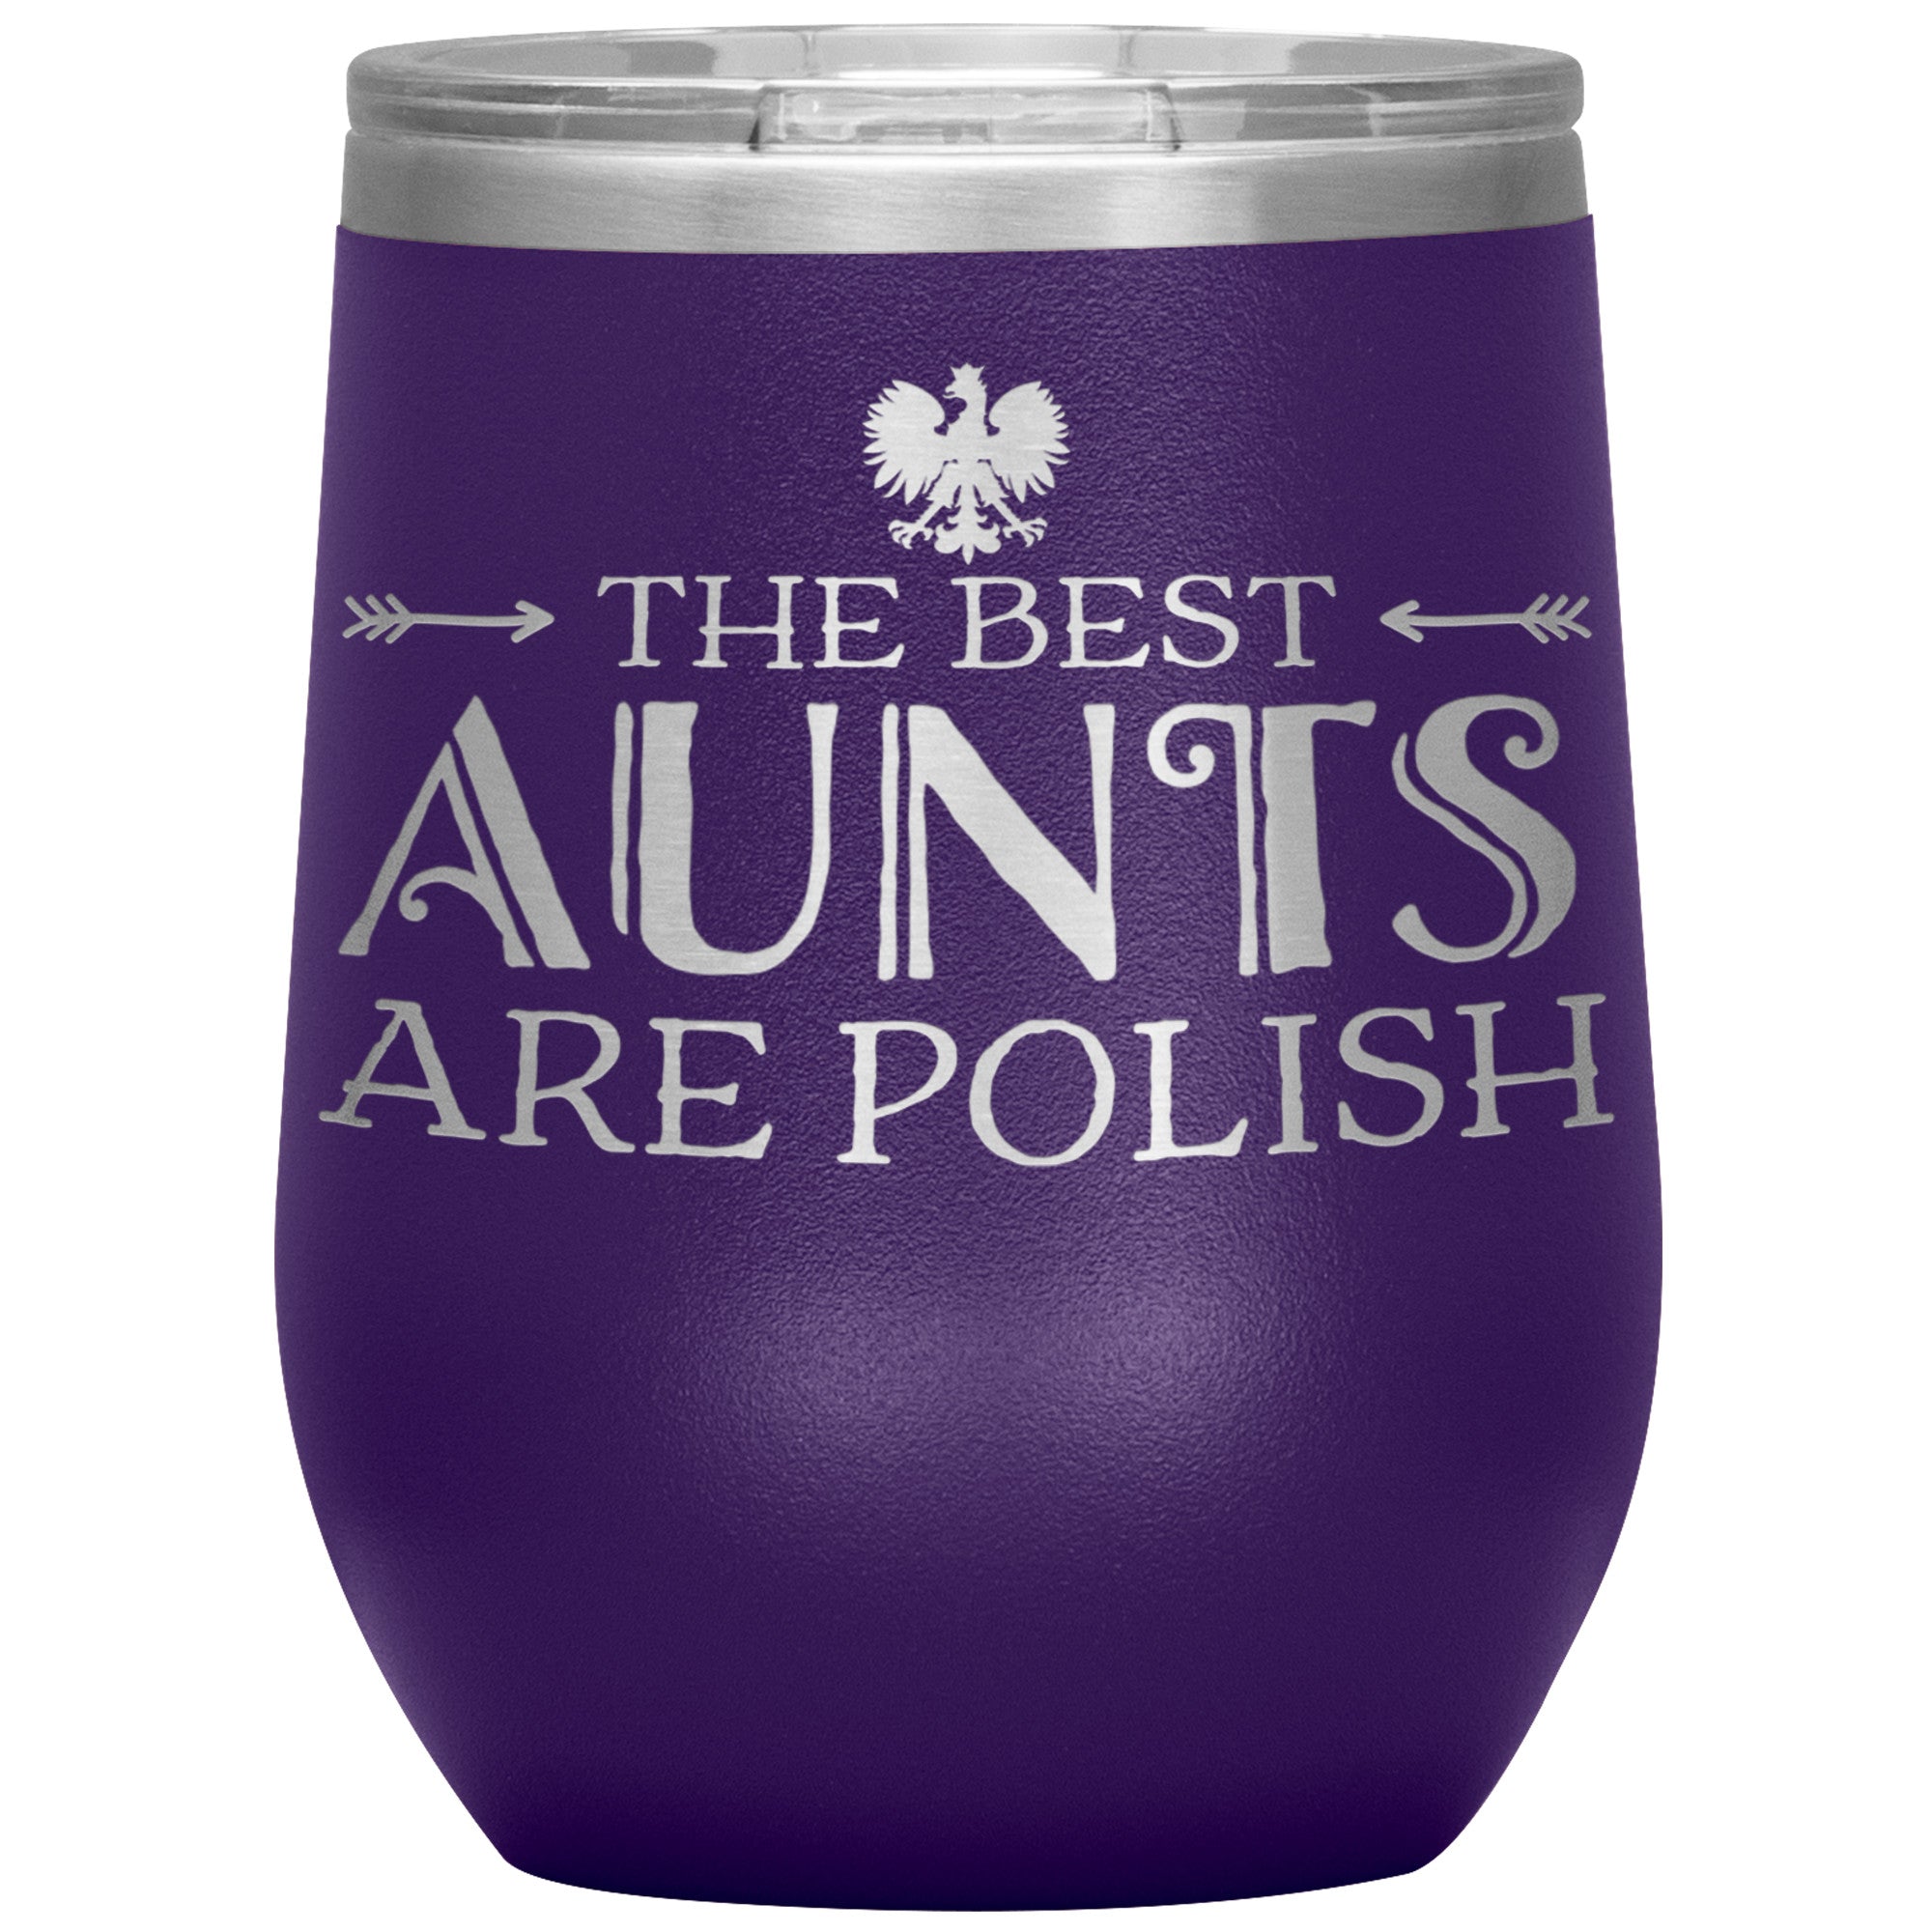 The Best Aunts Are Polish Insulated Wine Tumbler Tumblers teelaunch Purple  